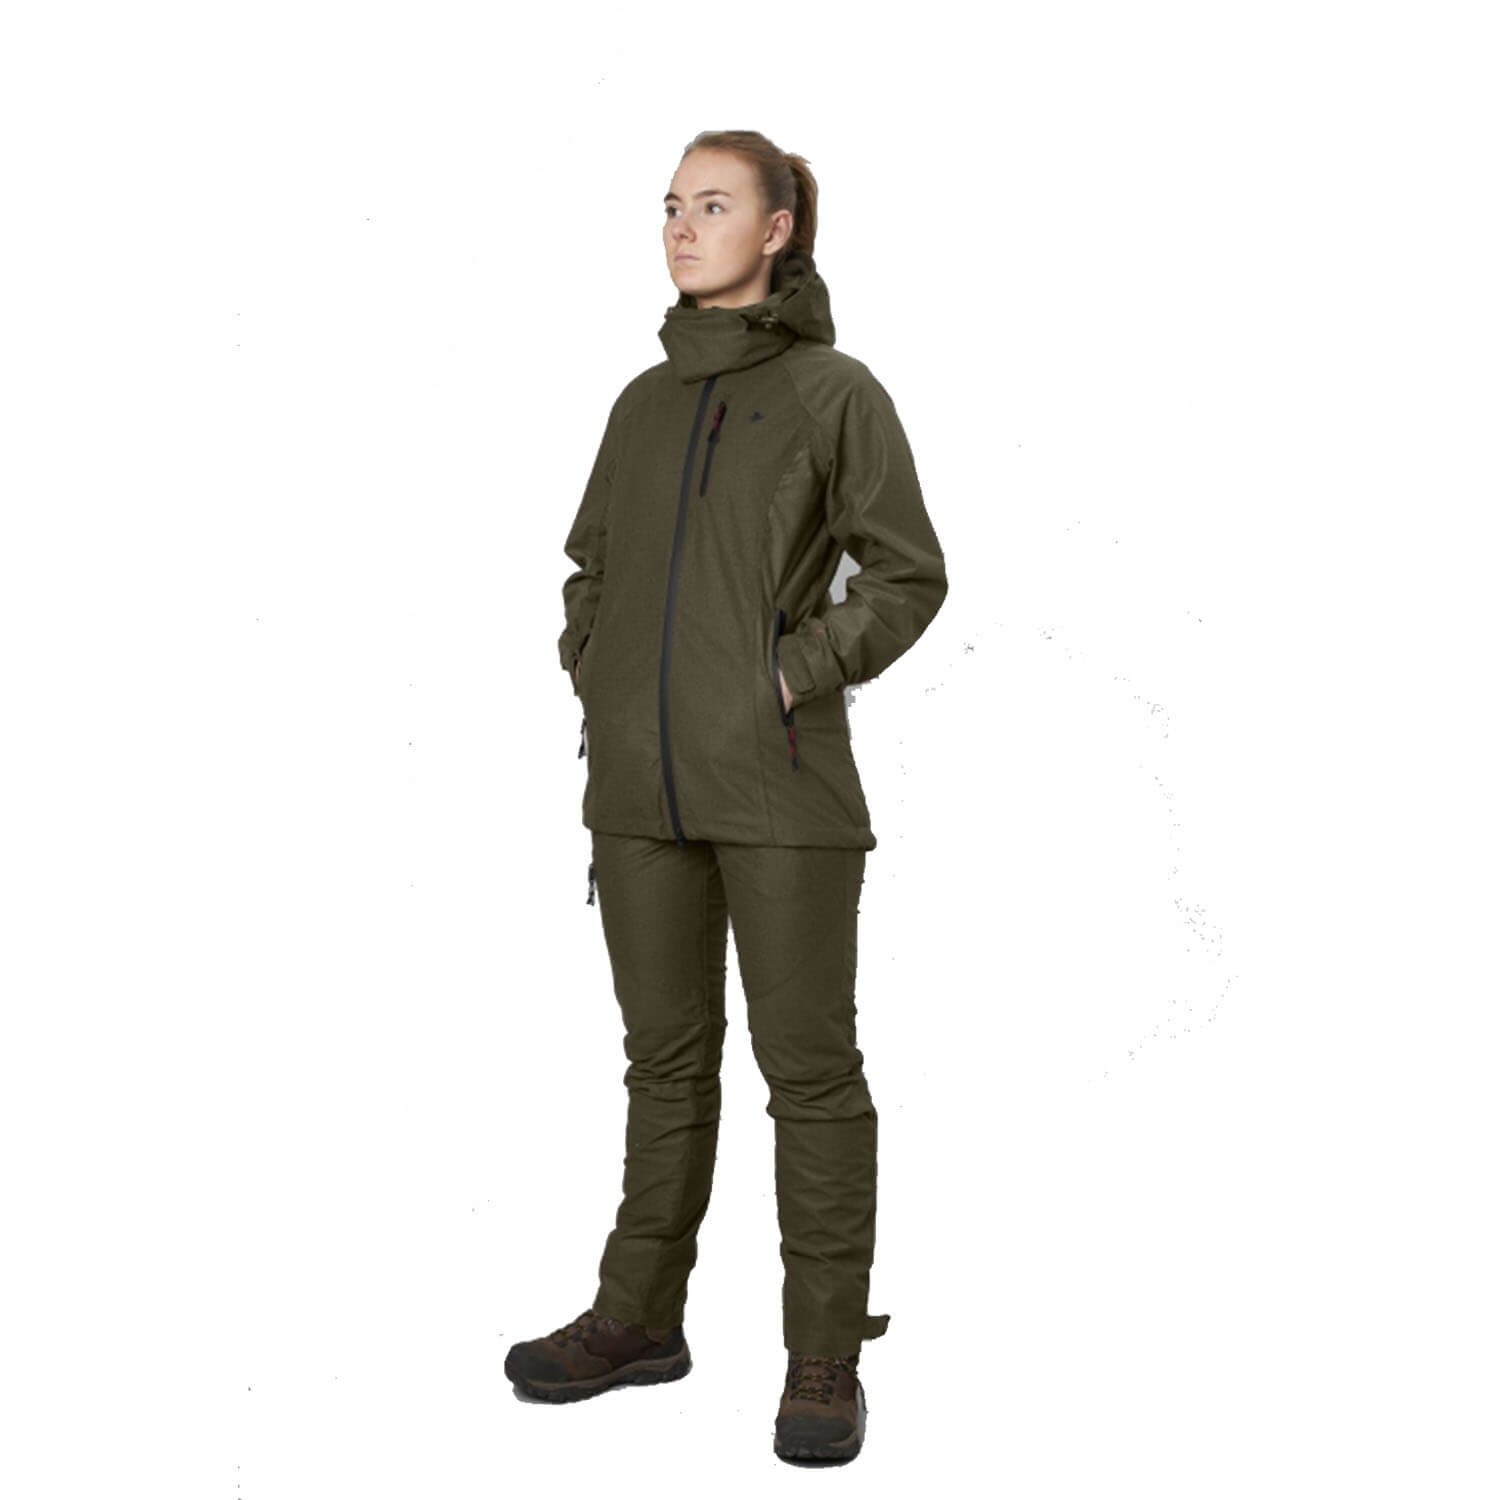 Seeland lady jacket avail (pine green melange)